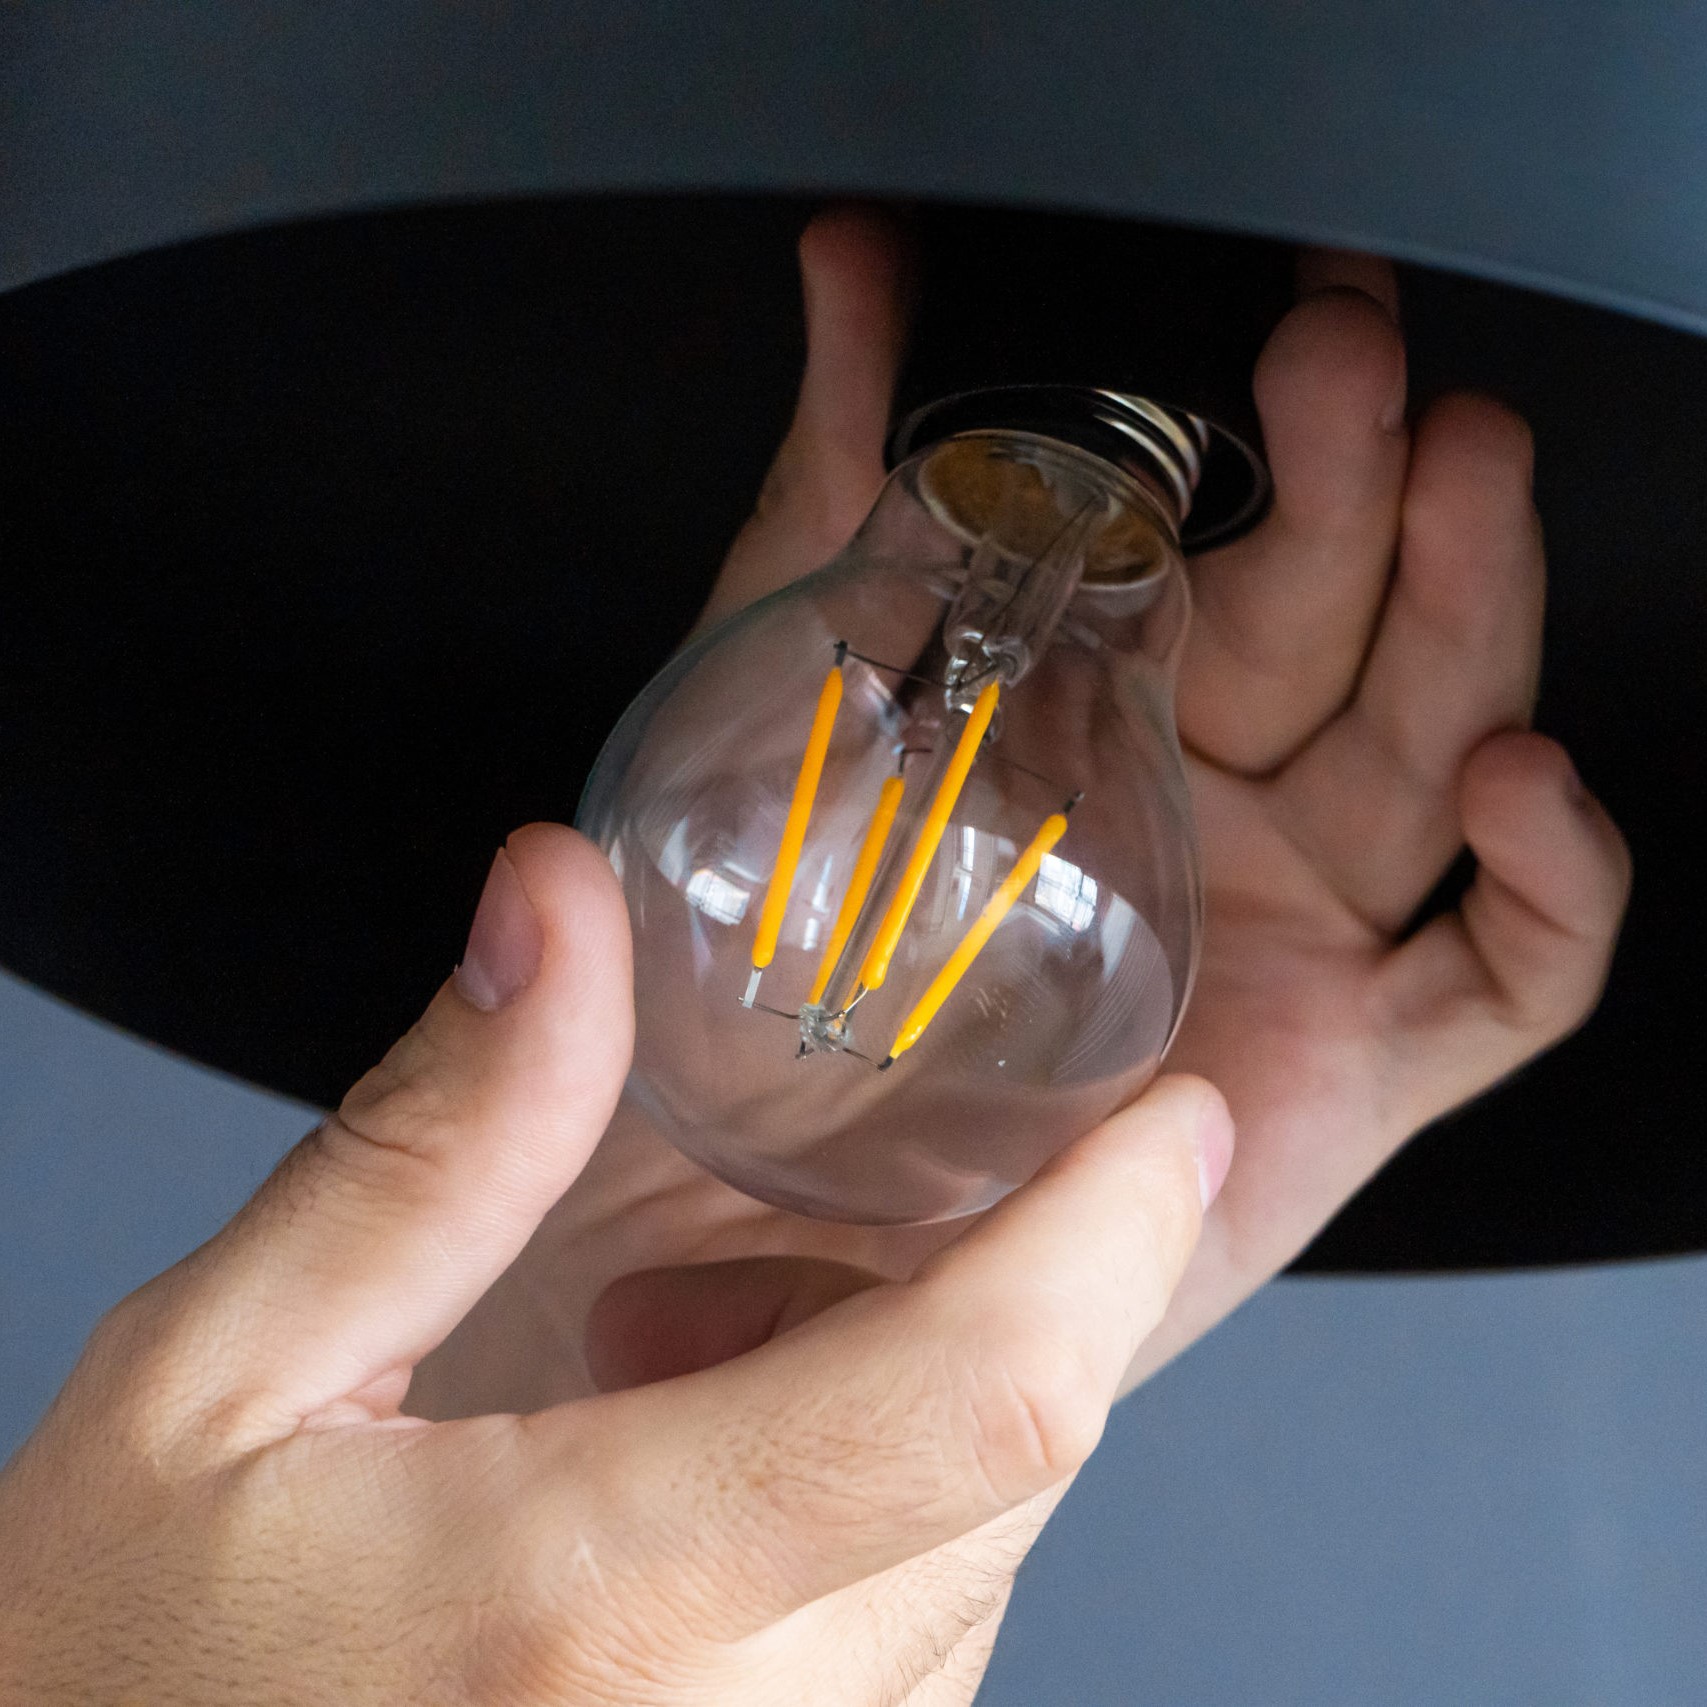 Close-up. A hand changes a light bulb in a stylish loft lamp. Spiral filament lamp. Modern interior decor.